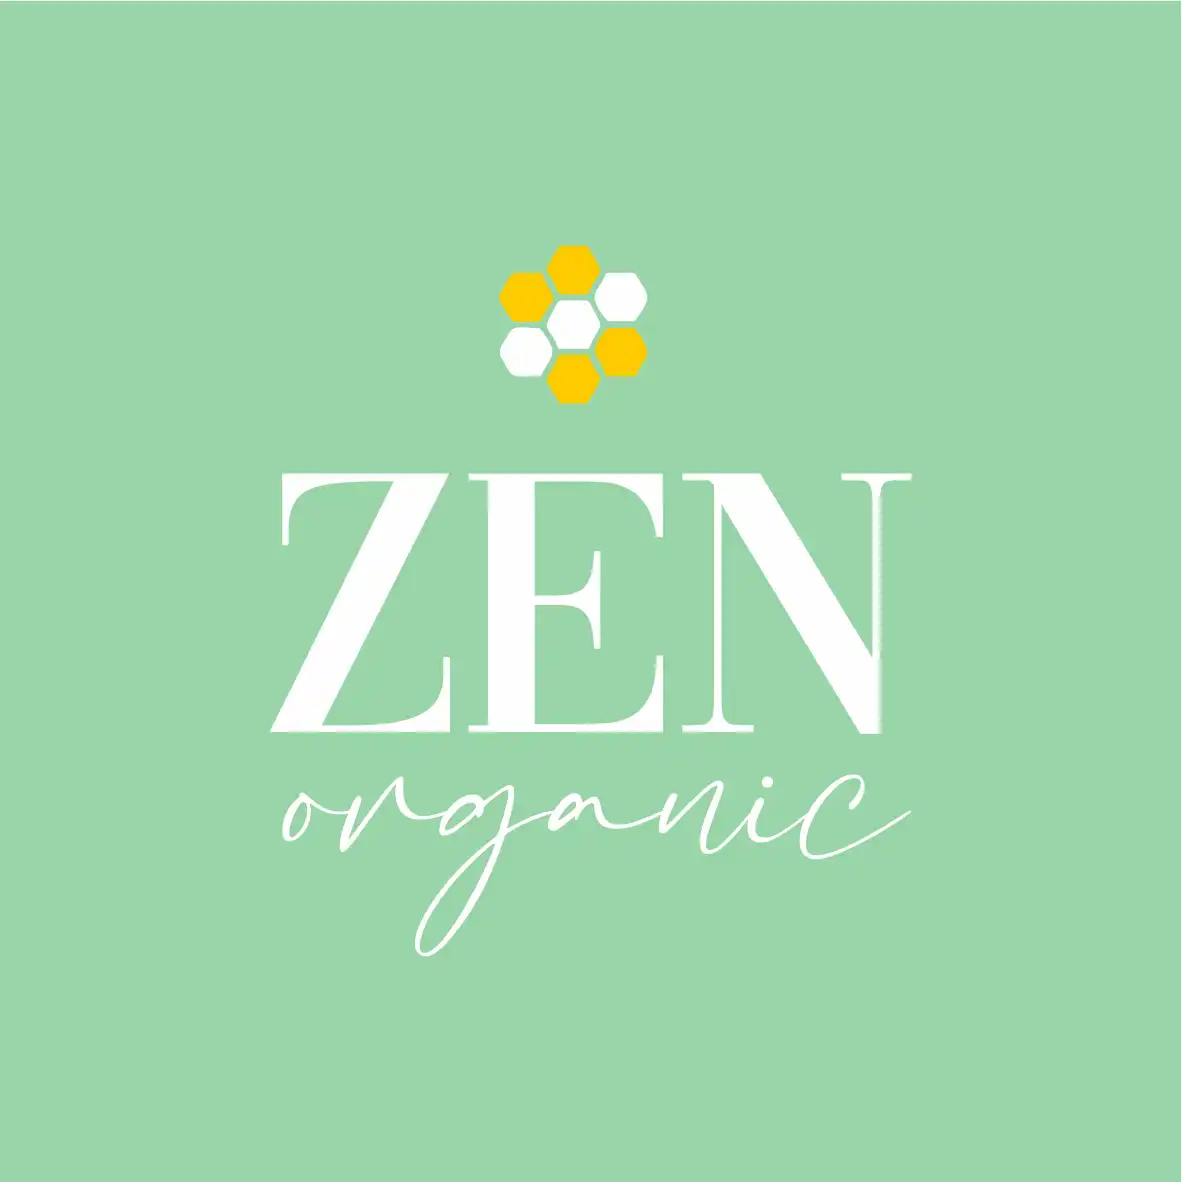 
Logotipo Logomarca Produtos Cosméticos Orgânicos Cremes e Perfumes Orgânicos



